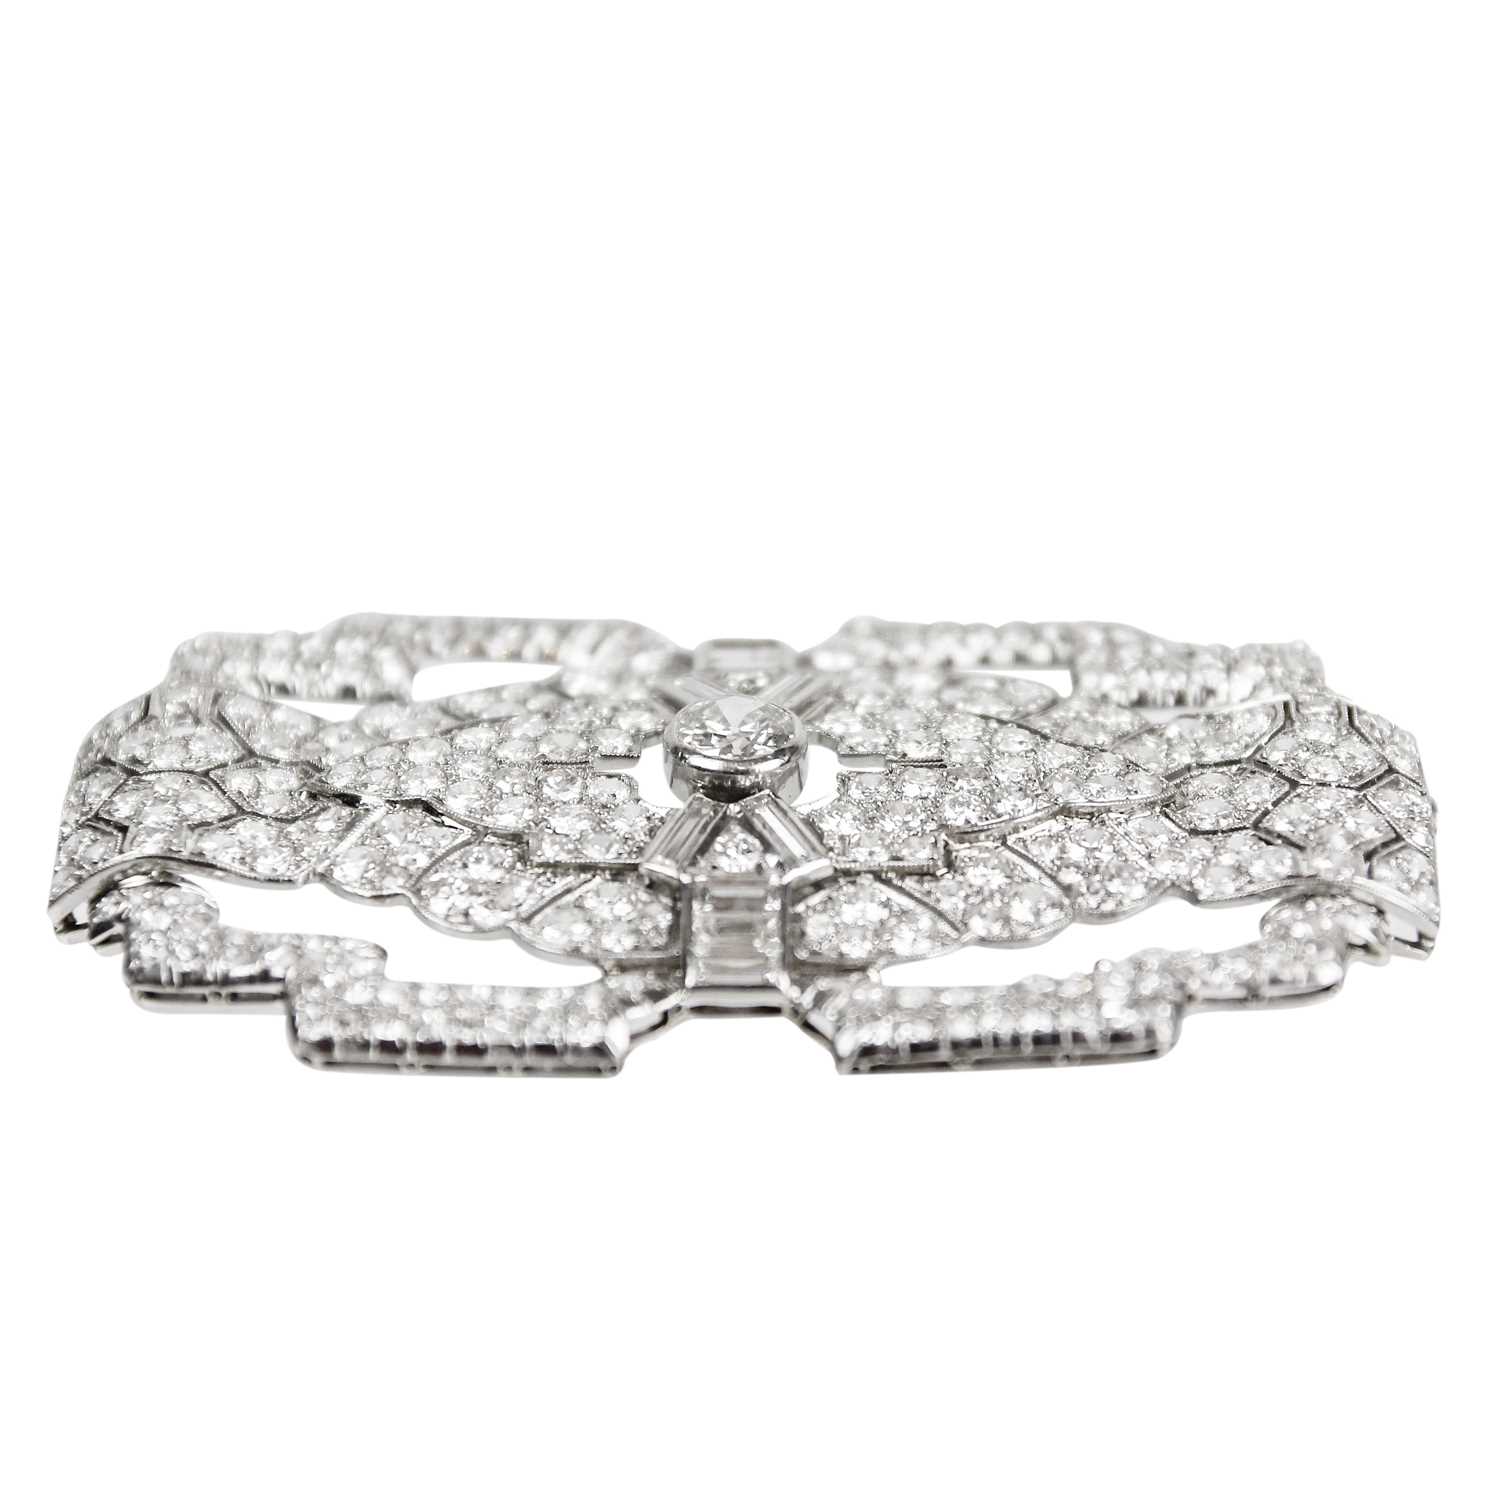 An exquisite Art Deco platinum diamond set brooch. - Image 2 of 3